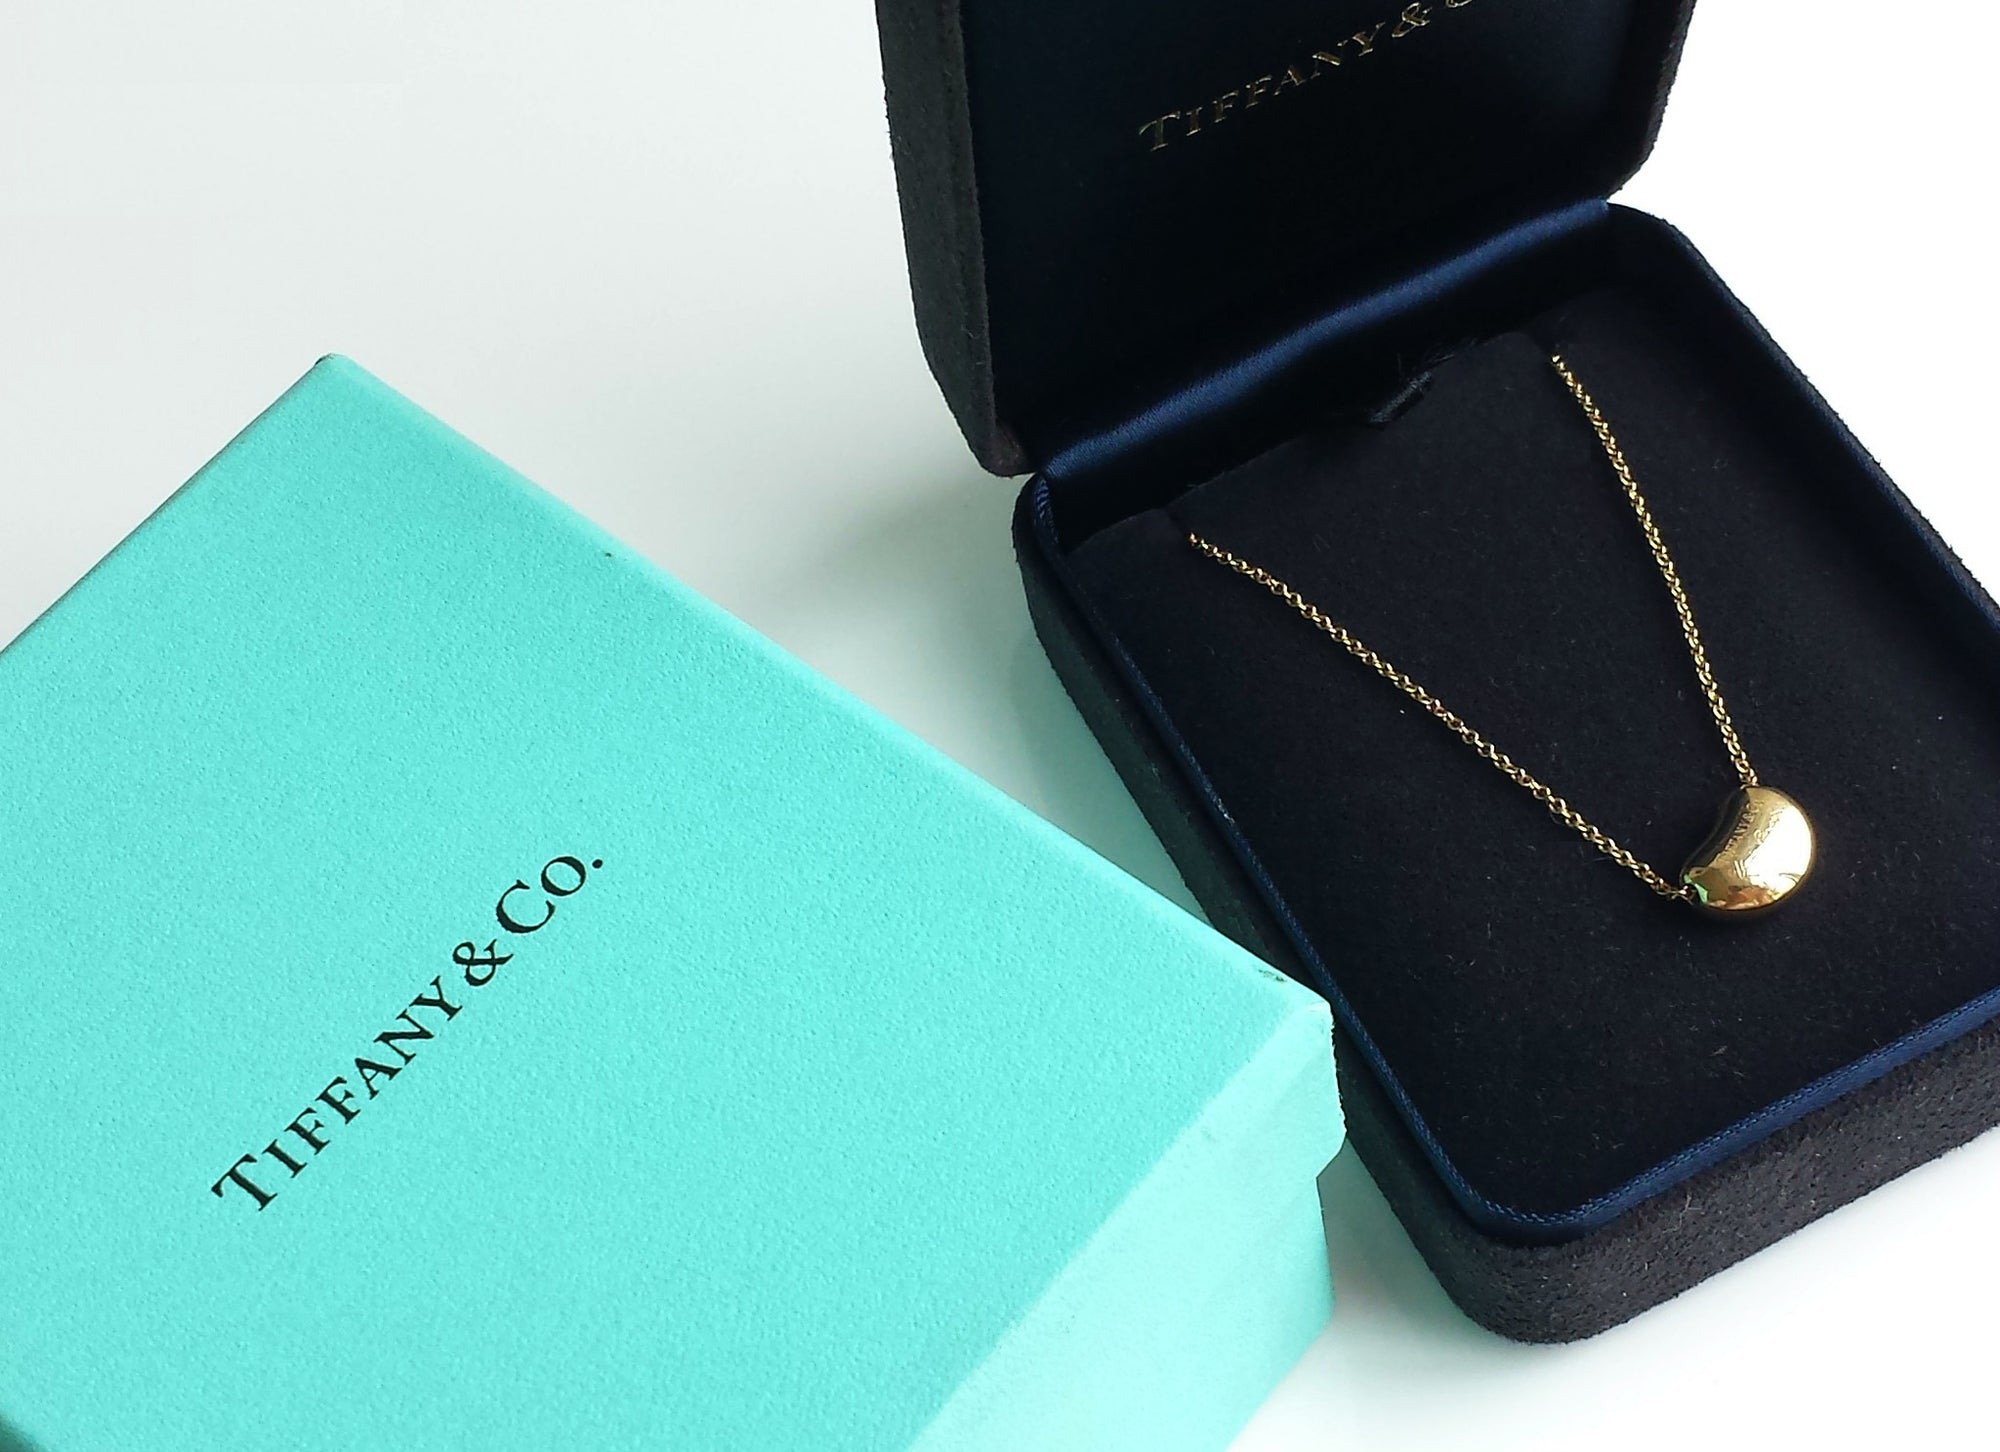 Tiffany & Co Elsa Peretti Bean 18k Yellow Gold Necklace 18" Chain Boxes